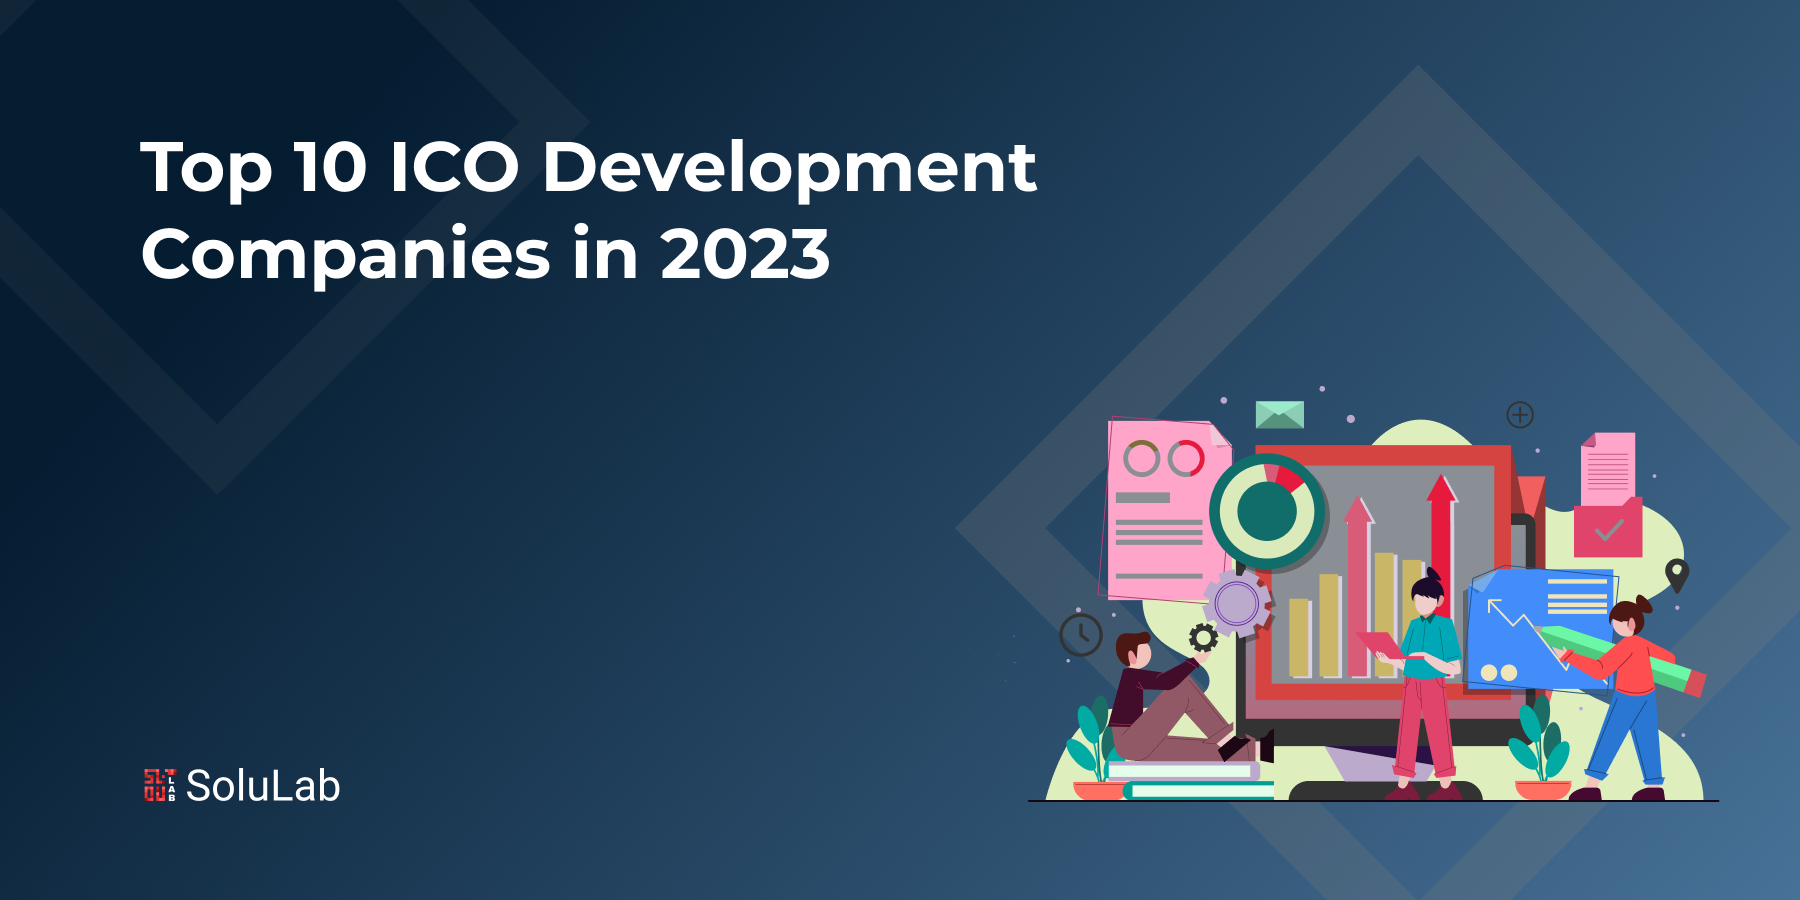 Top 10 ICO Development Companies in 2023